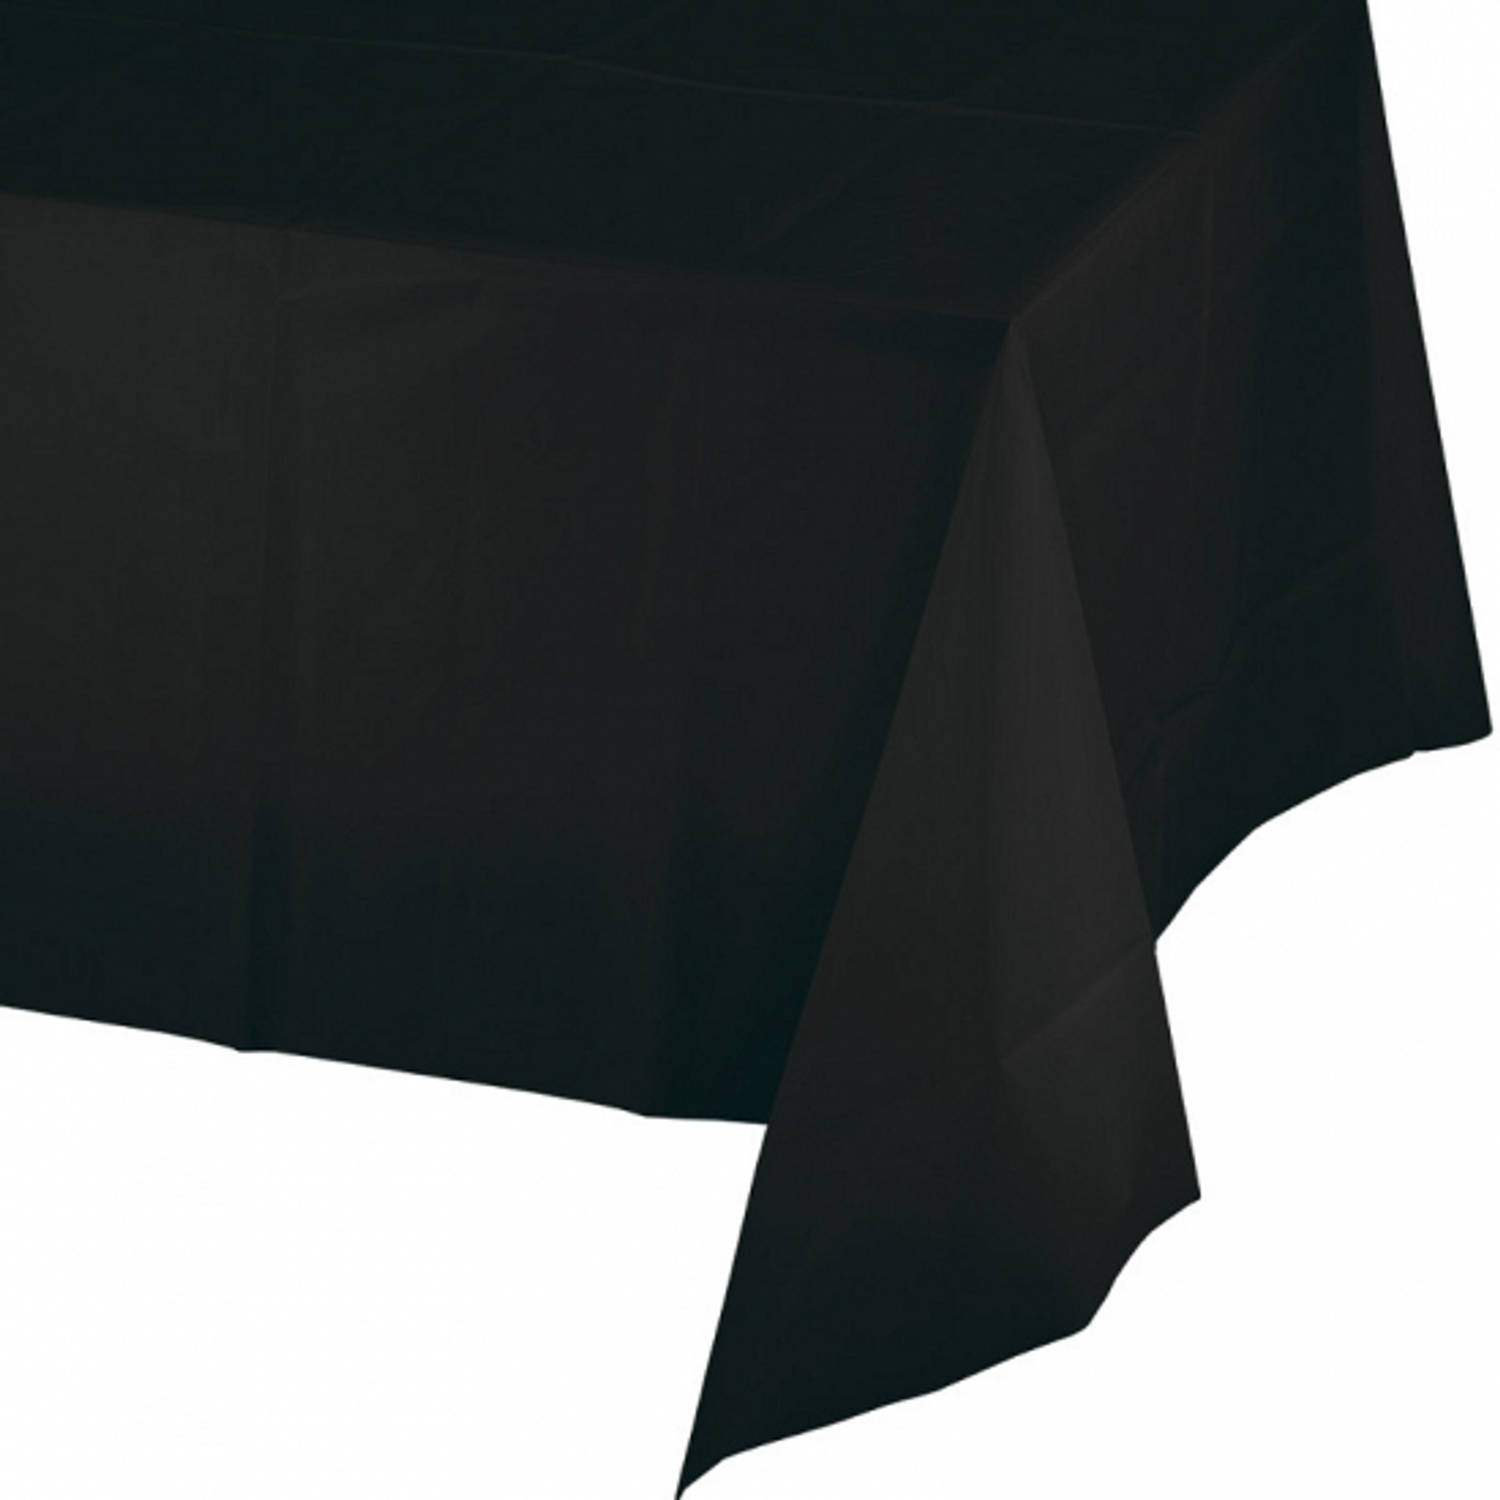 nationale vlag verzoek vreugde Halloween Tafelkleed zwart 274 x 137 cm - Feesttafelkleden | Blokker